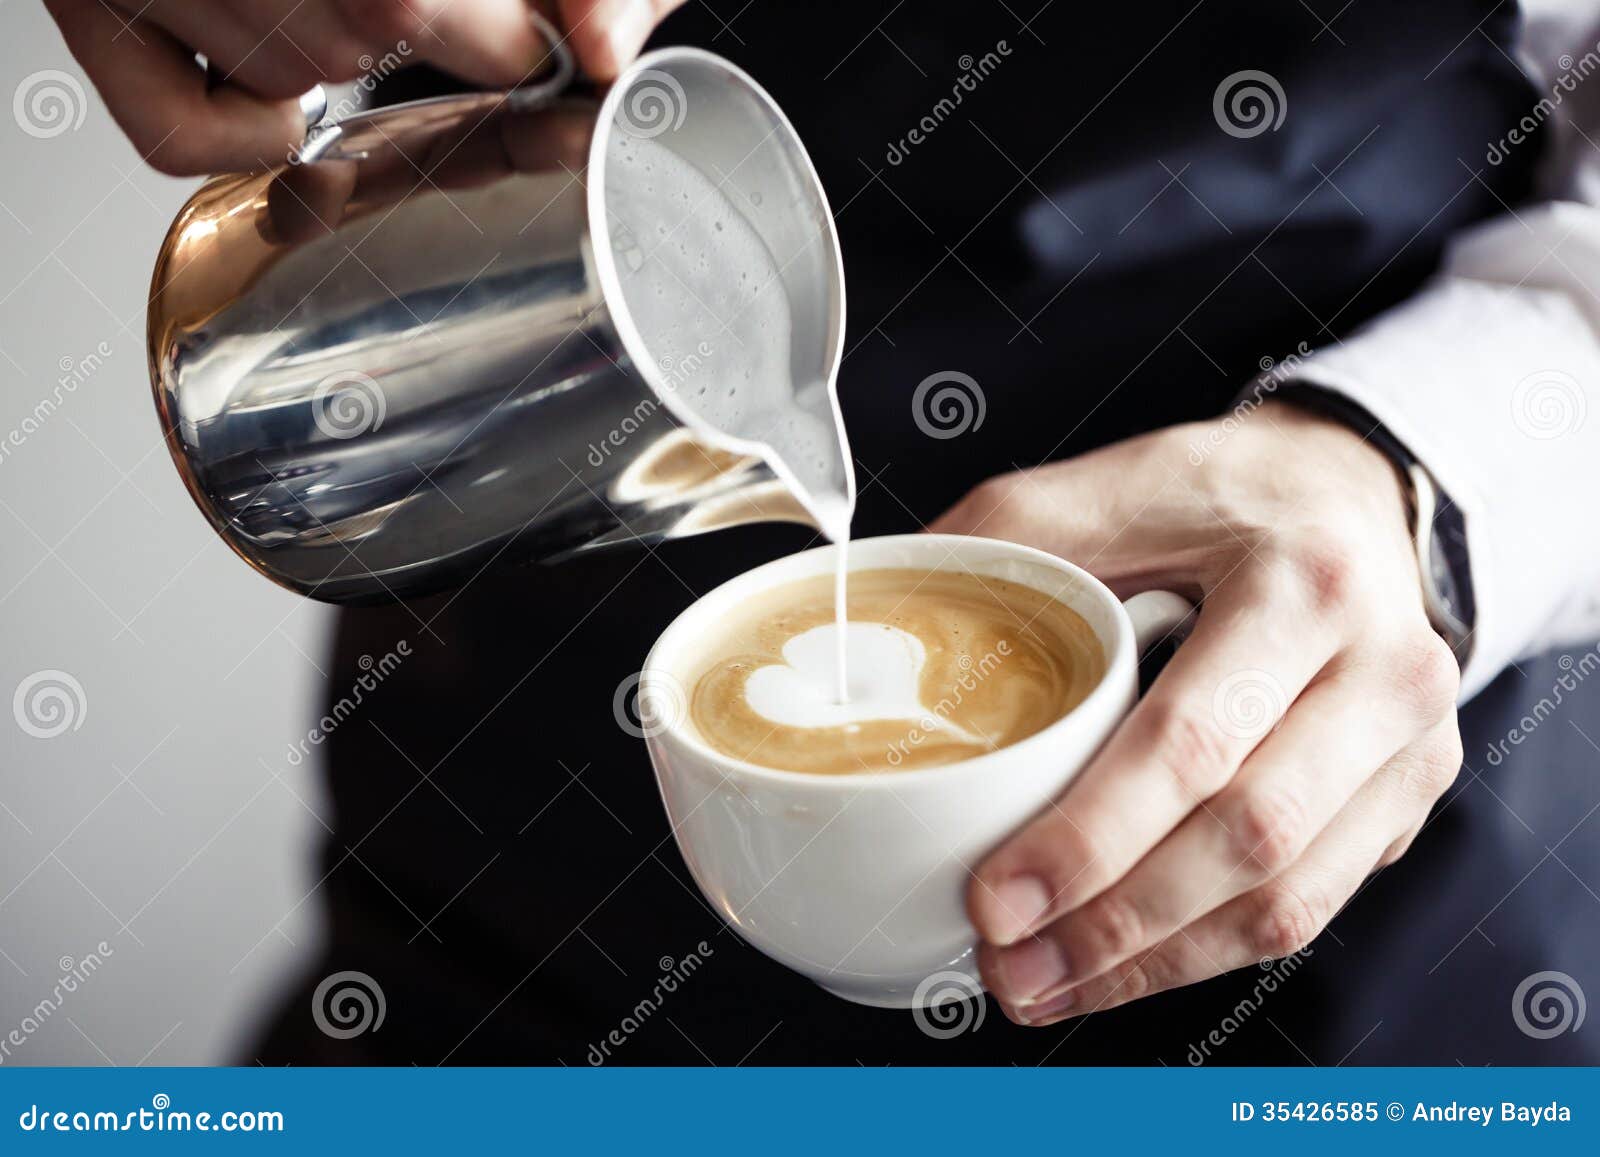 barman making coffee, pouring milk